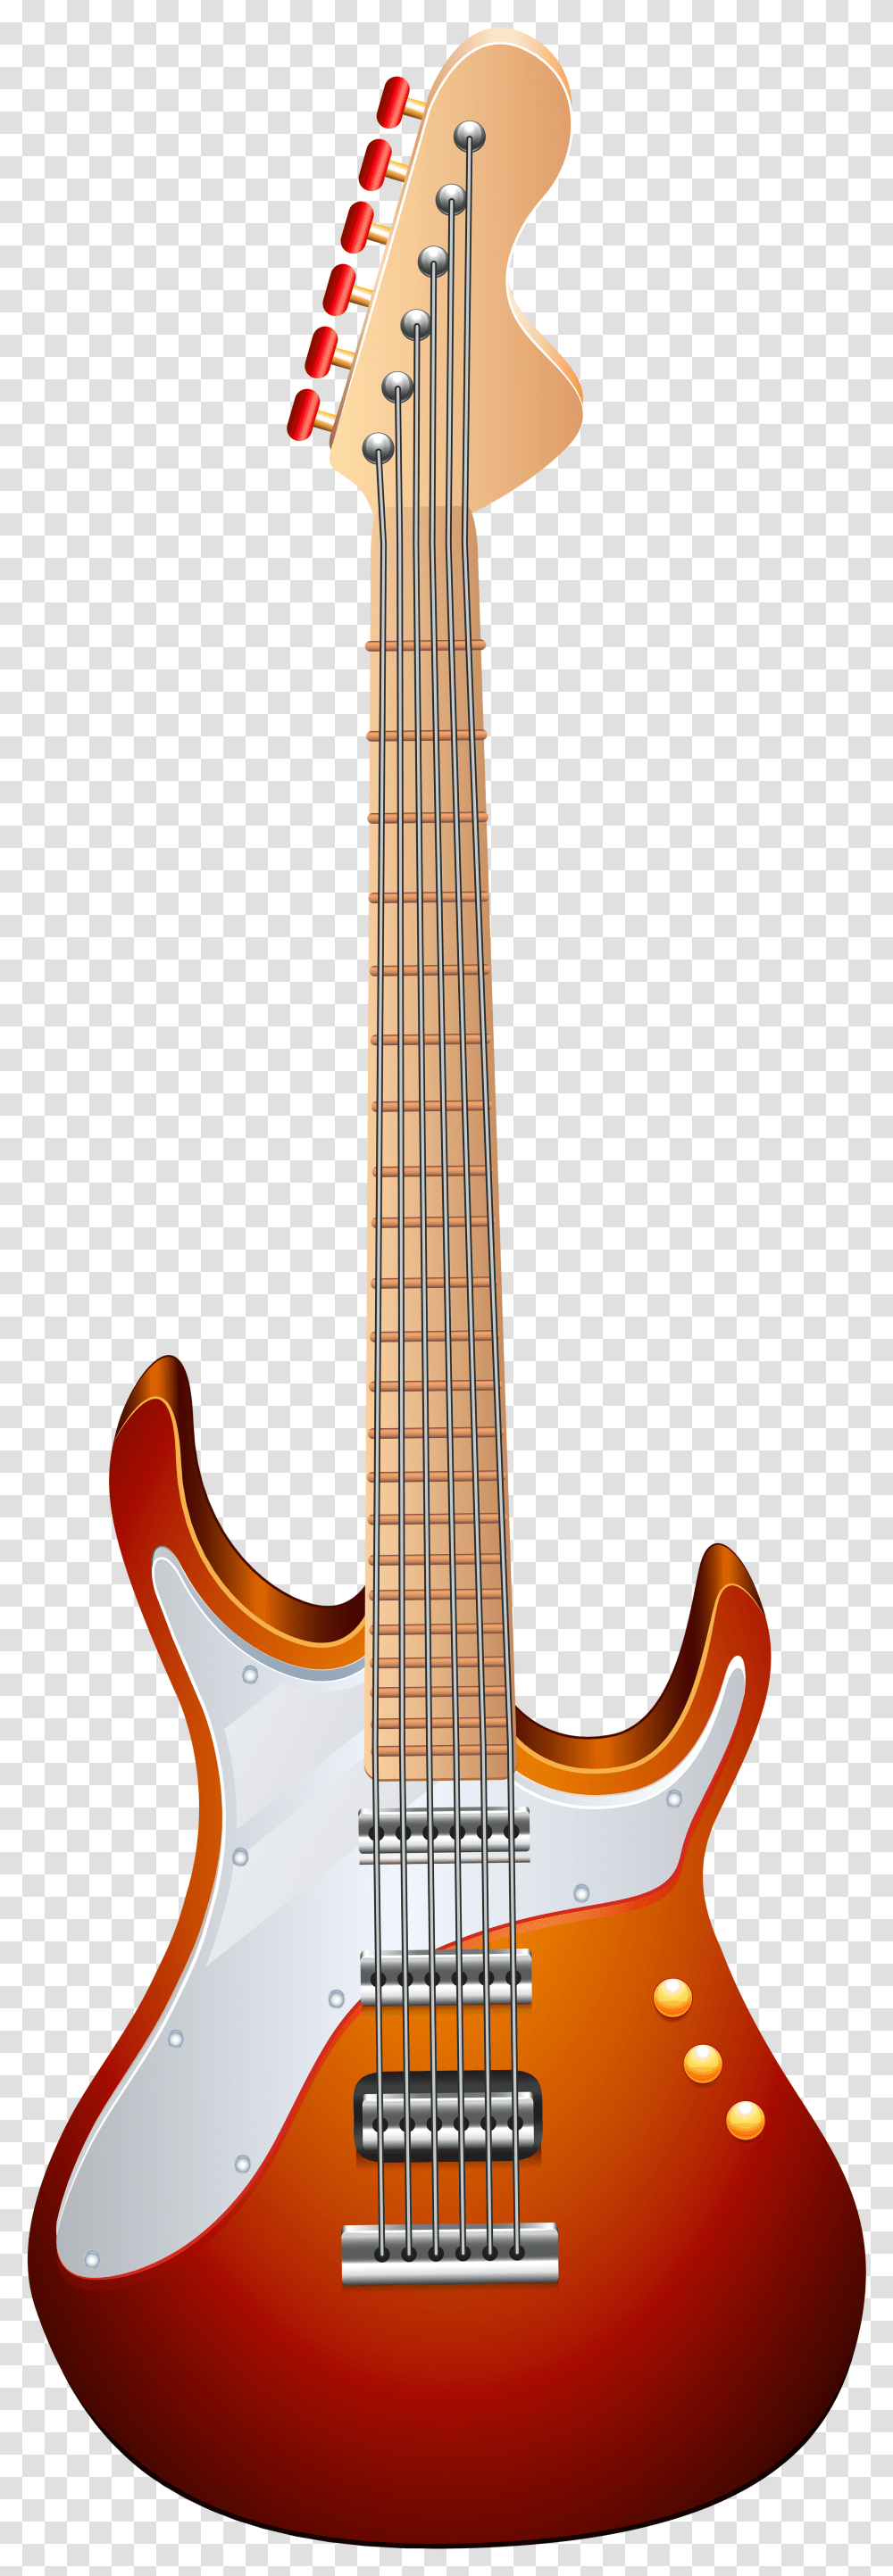 Guitar Clip Art Image Guitar Clipart Background, Leisure Activities, Musical Instrument, Bass Guitar, Electric Guitar Transparent Png